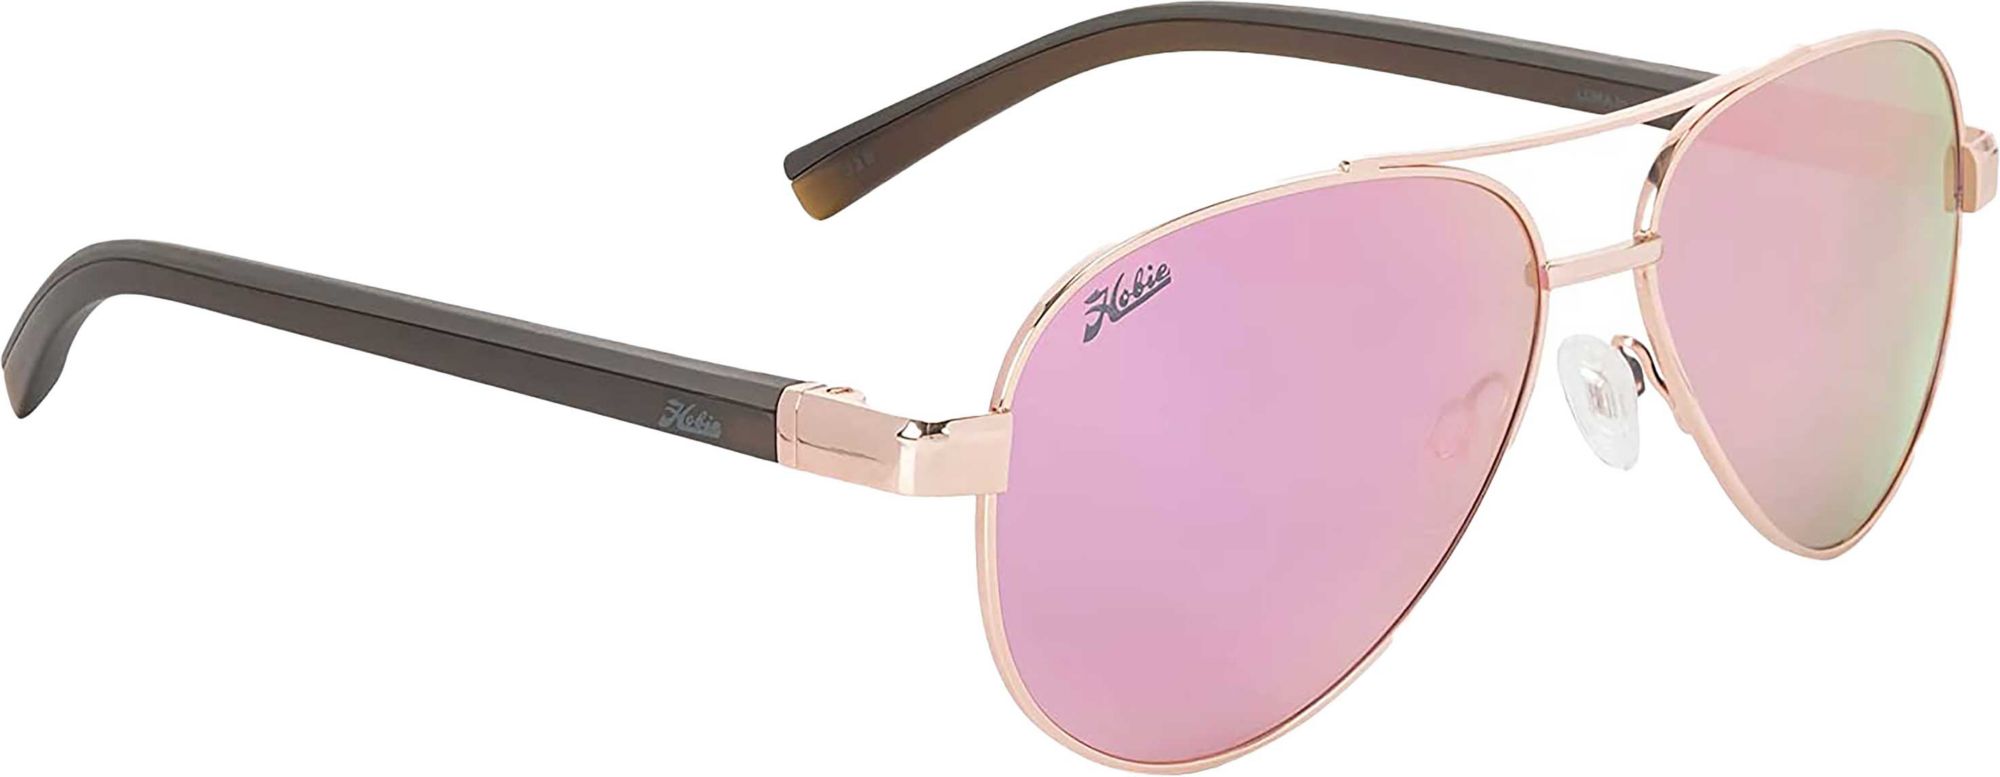 Hobie Loma Polarized Sunglasses